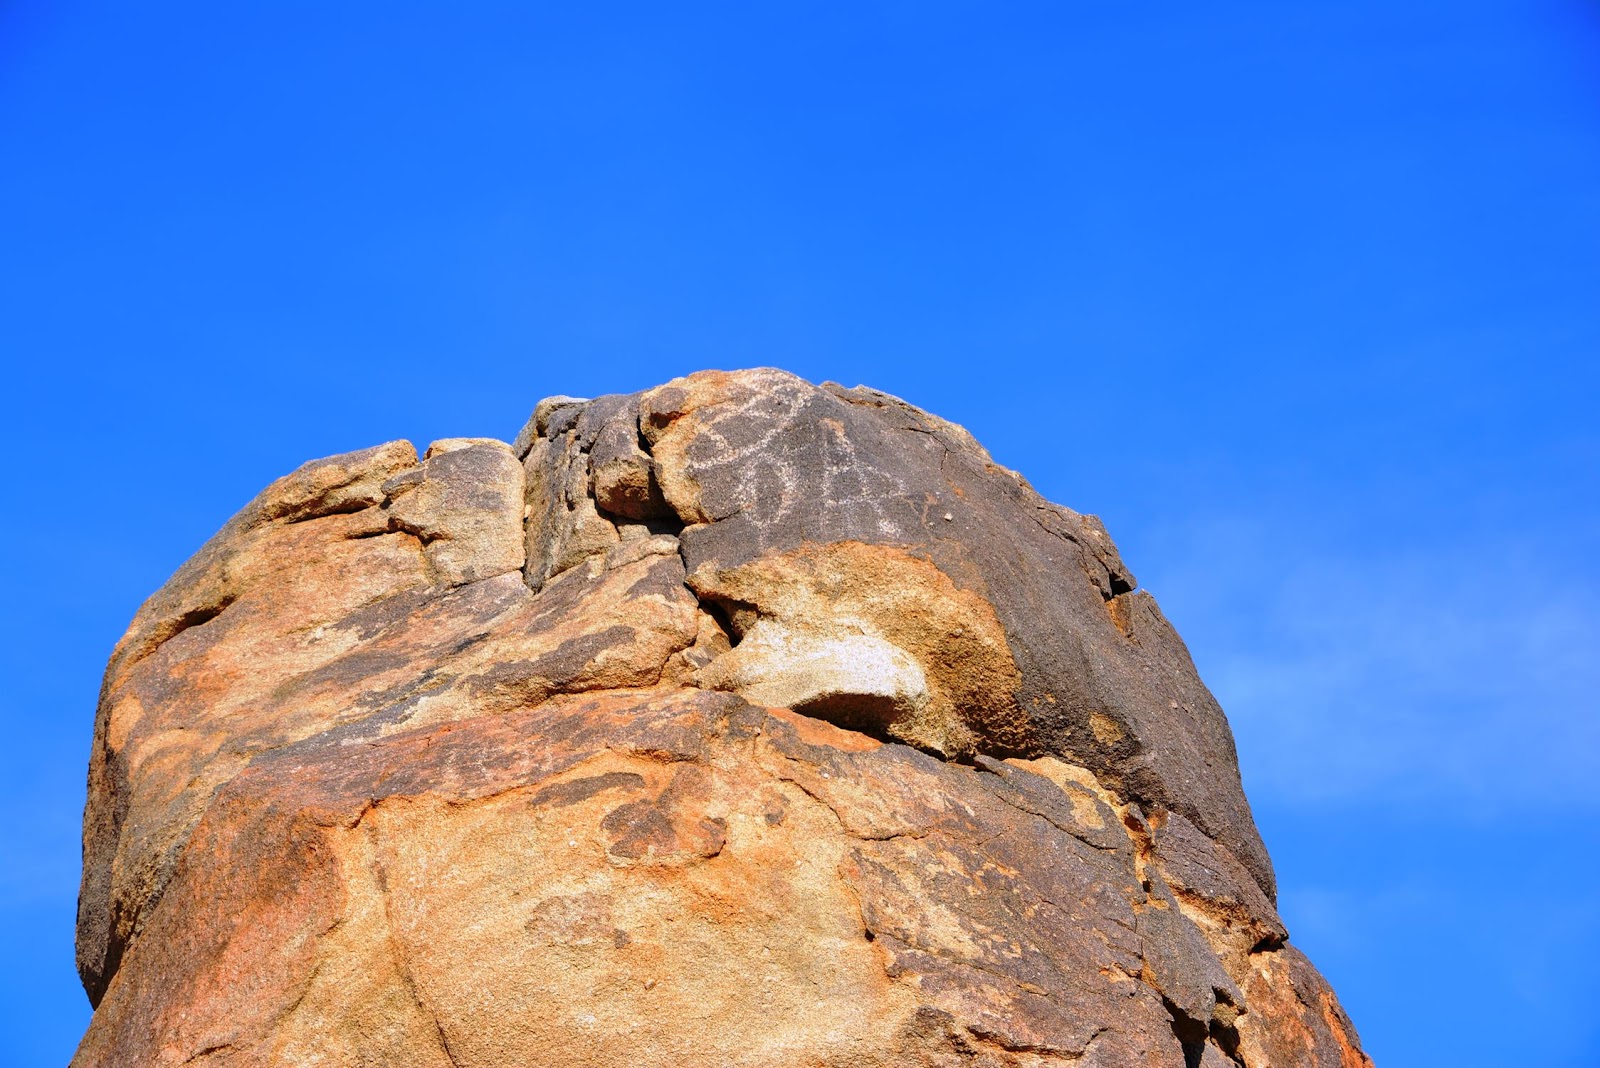 Patrick Tillett Coyote Hole Rock Art 1 The Good Joshua Tree